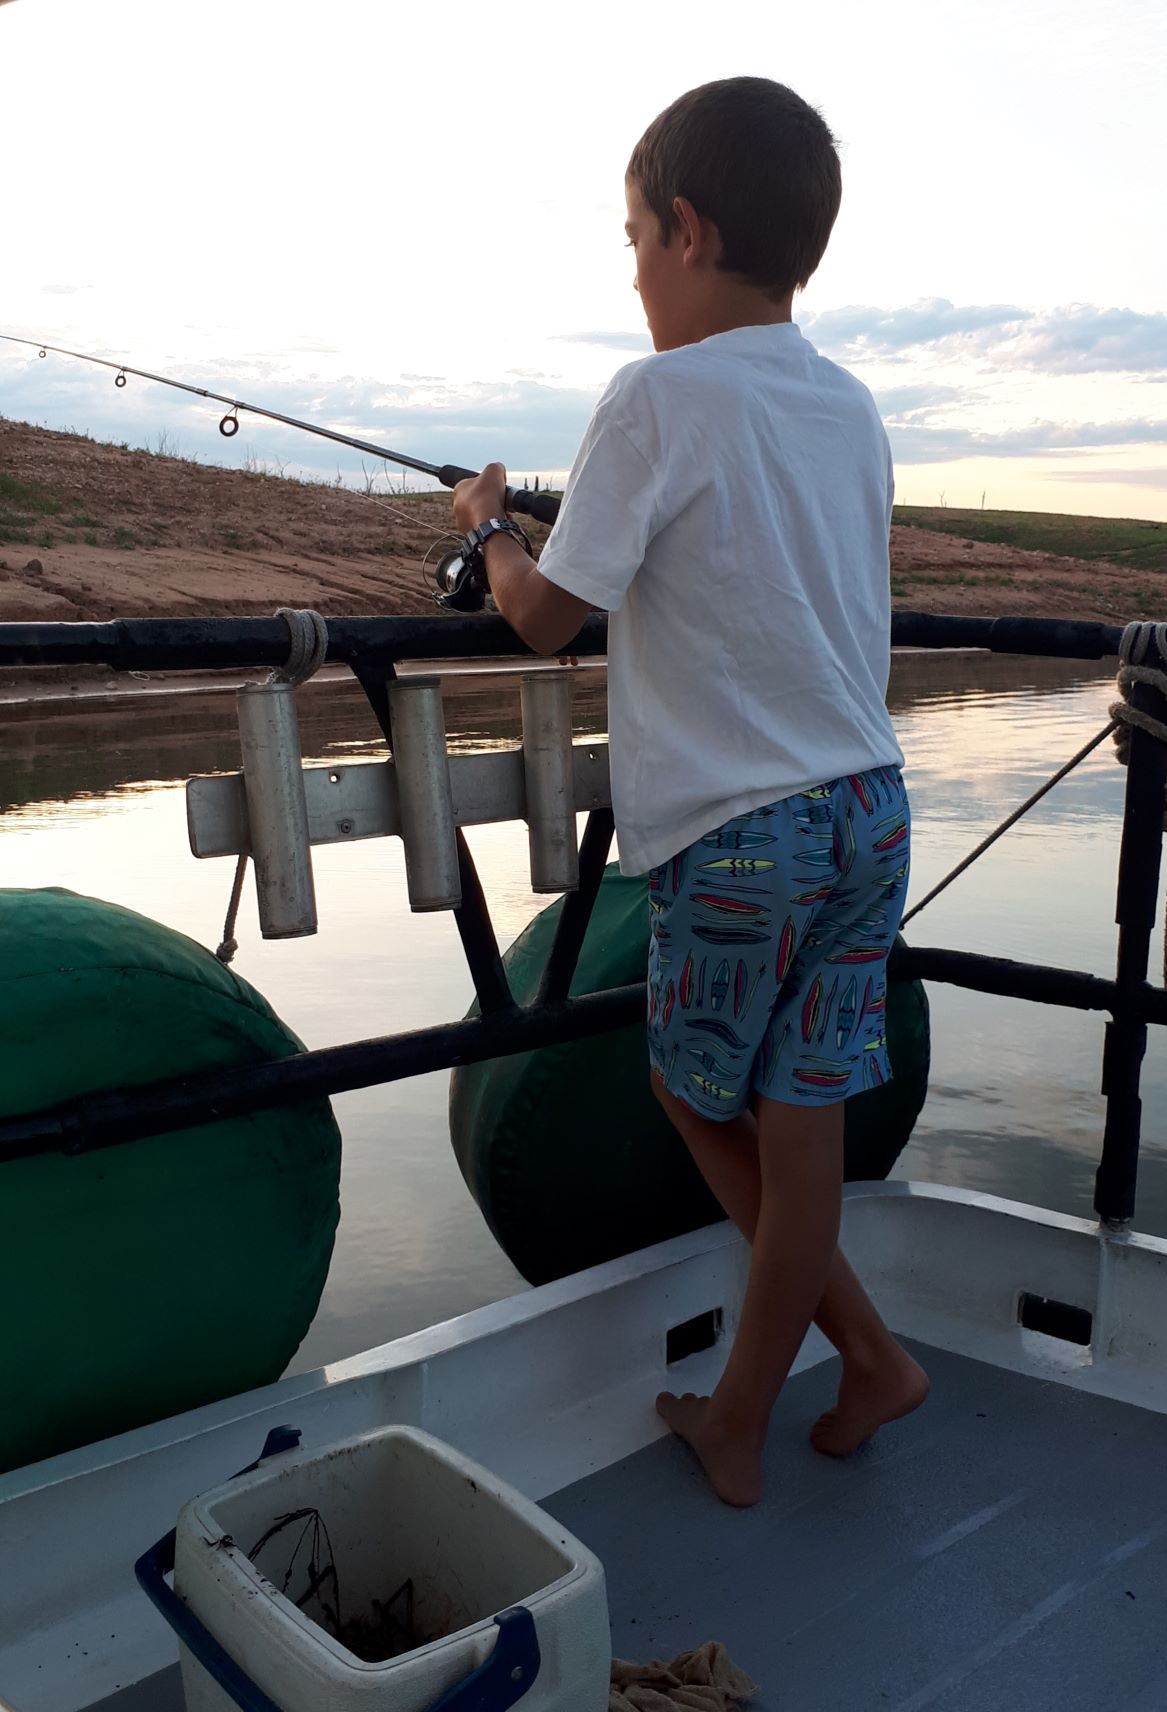 Murray John fishing off the houseboat.